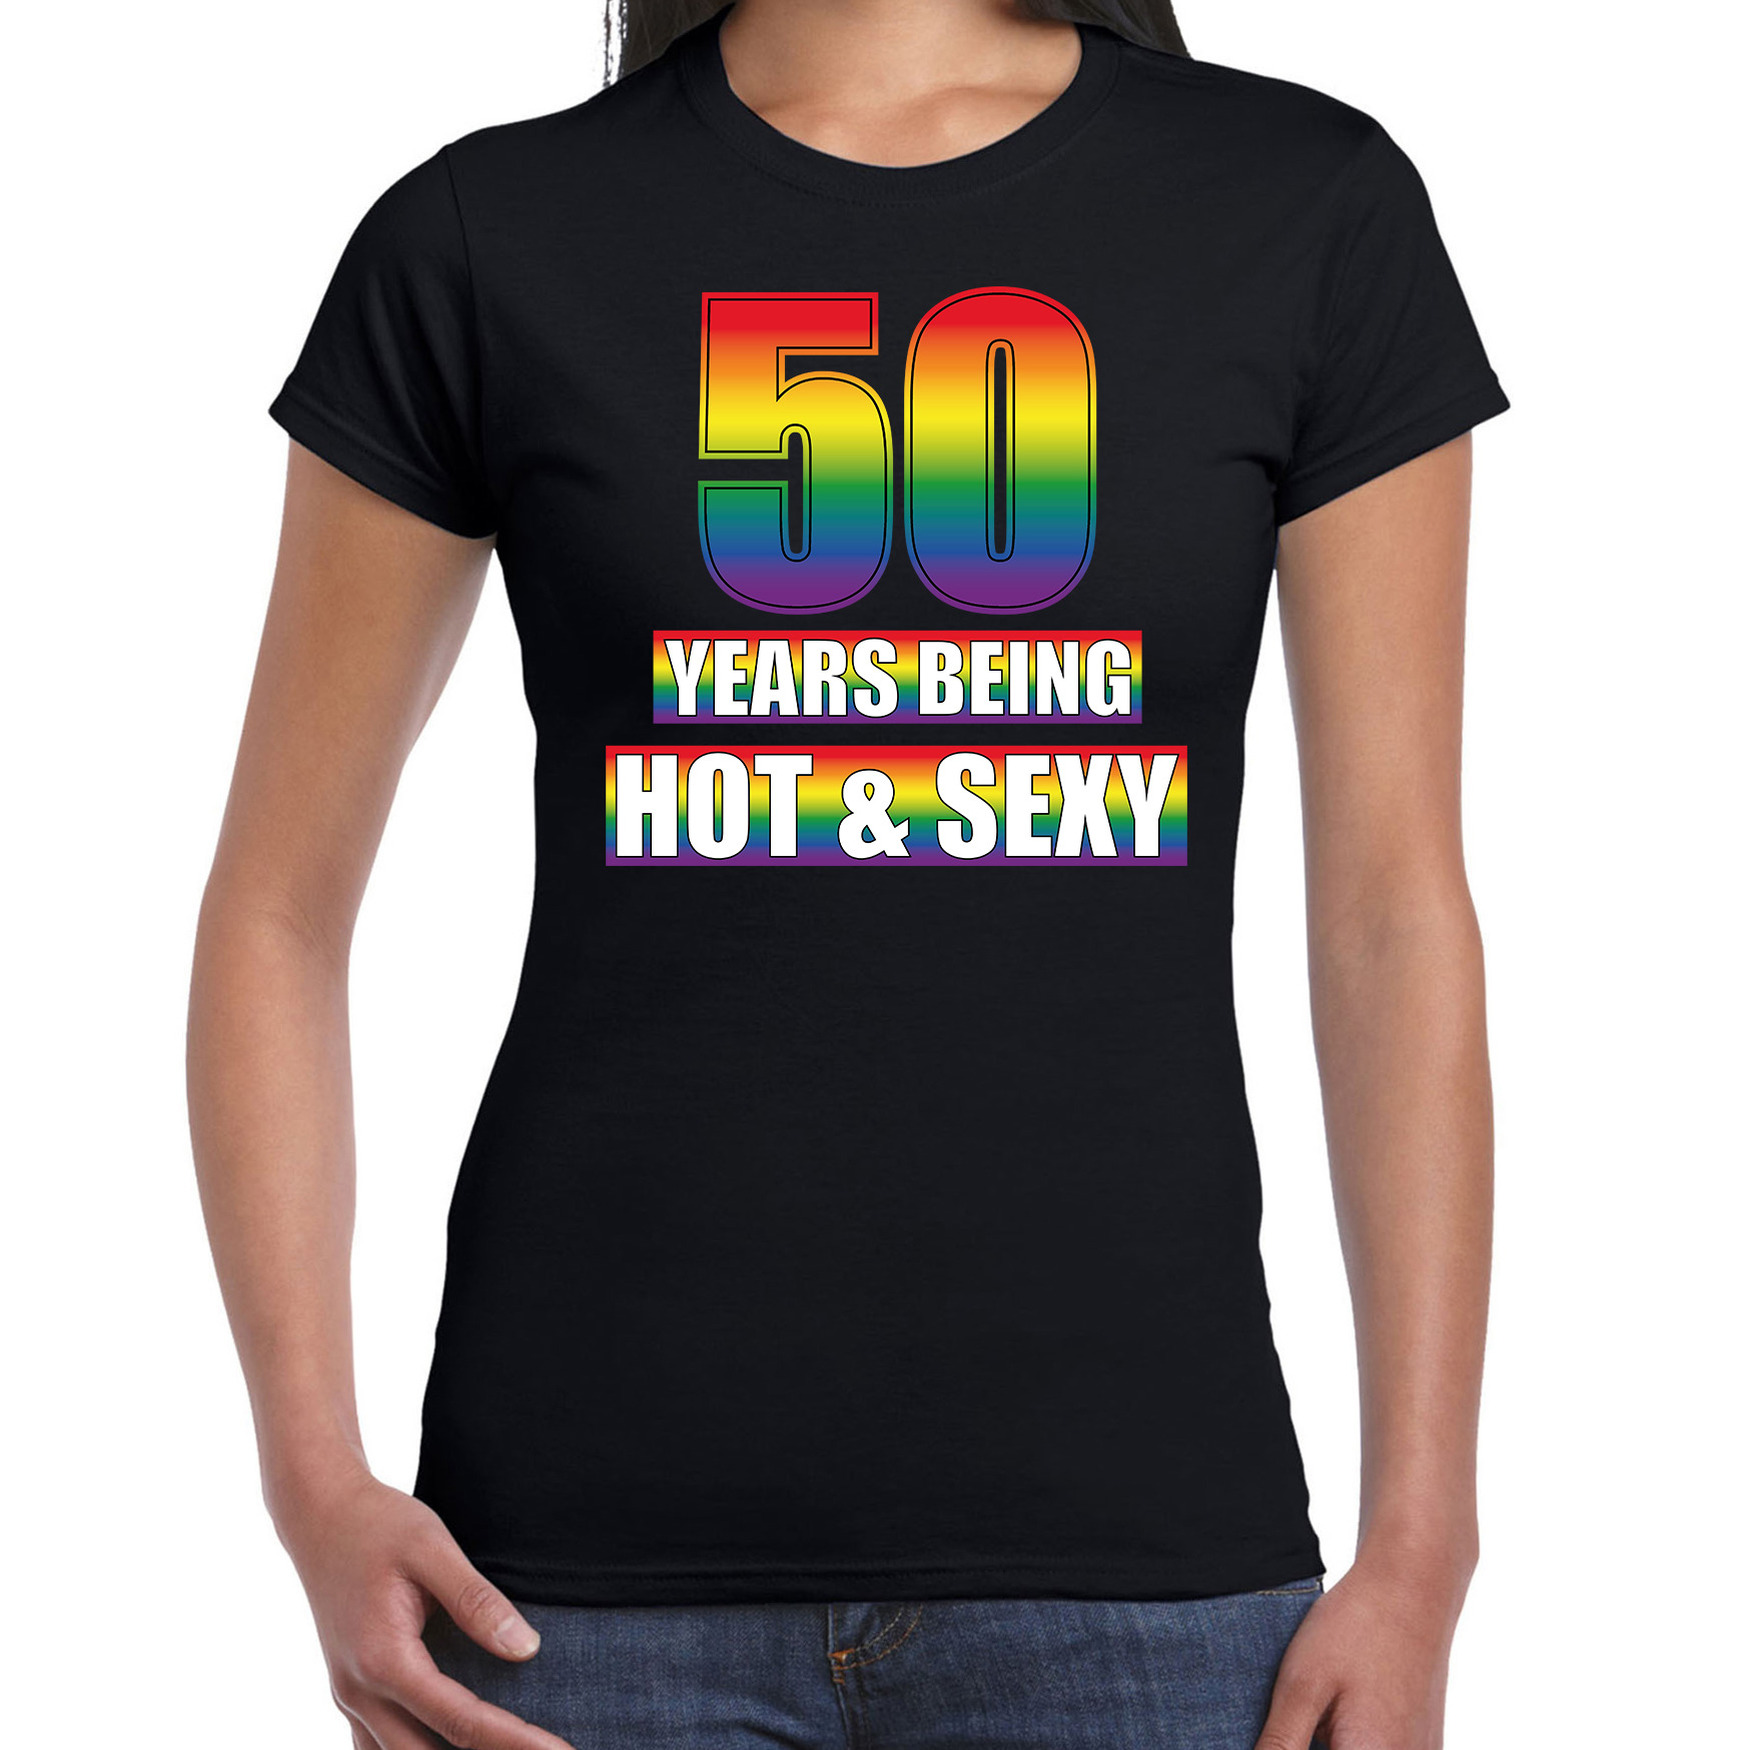 Hot en sexy 50 jaar verjaardag cadeau t-shirt zwart voor dames Gay- LHBT kleding-outfit-Sarah